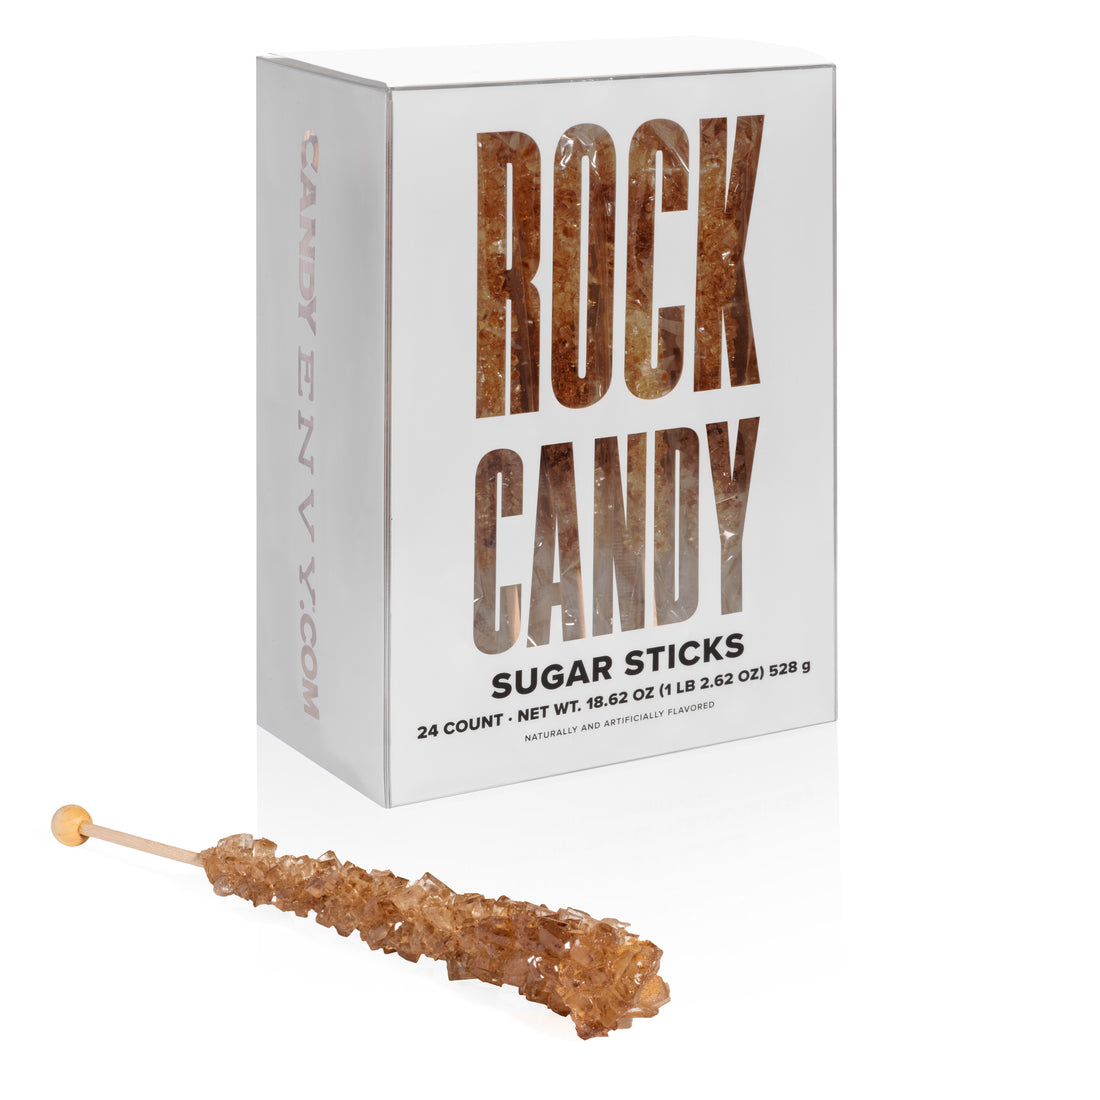 Amber Rock Candy Sugar Sticks - Root Beer Flavor